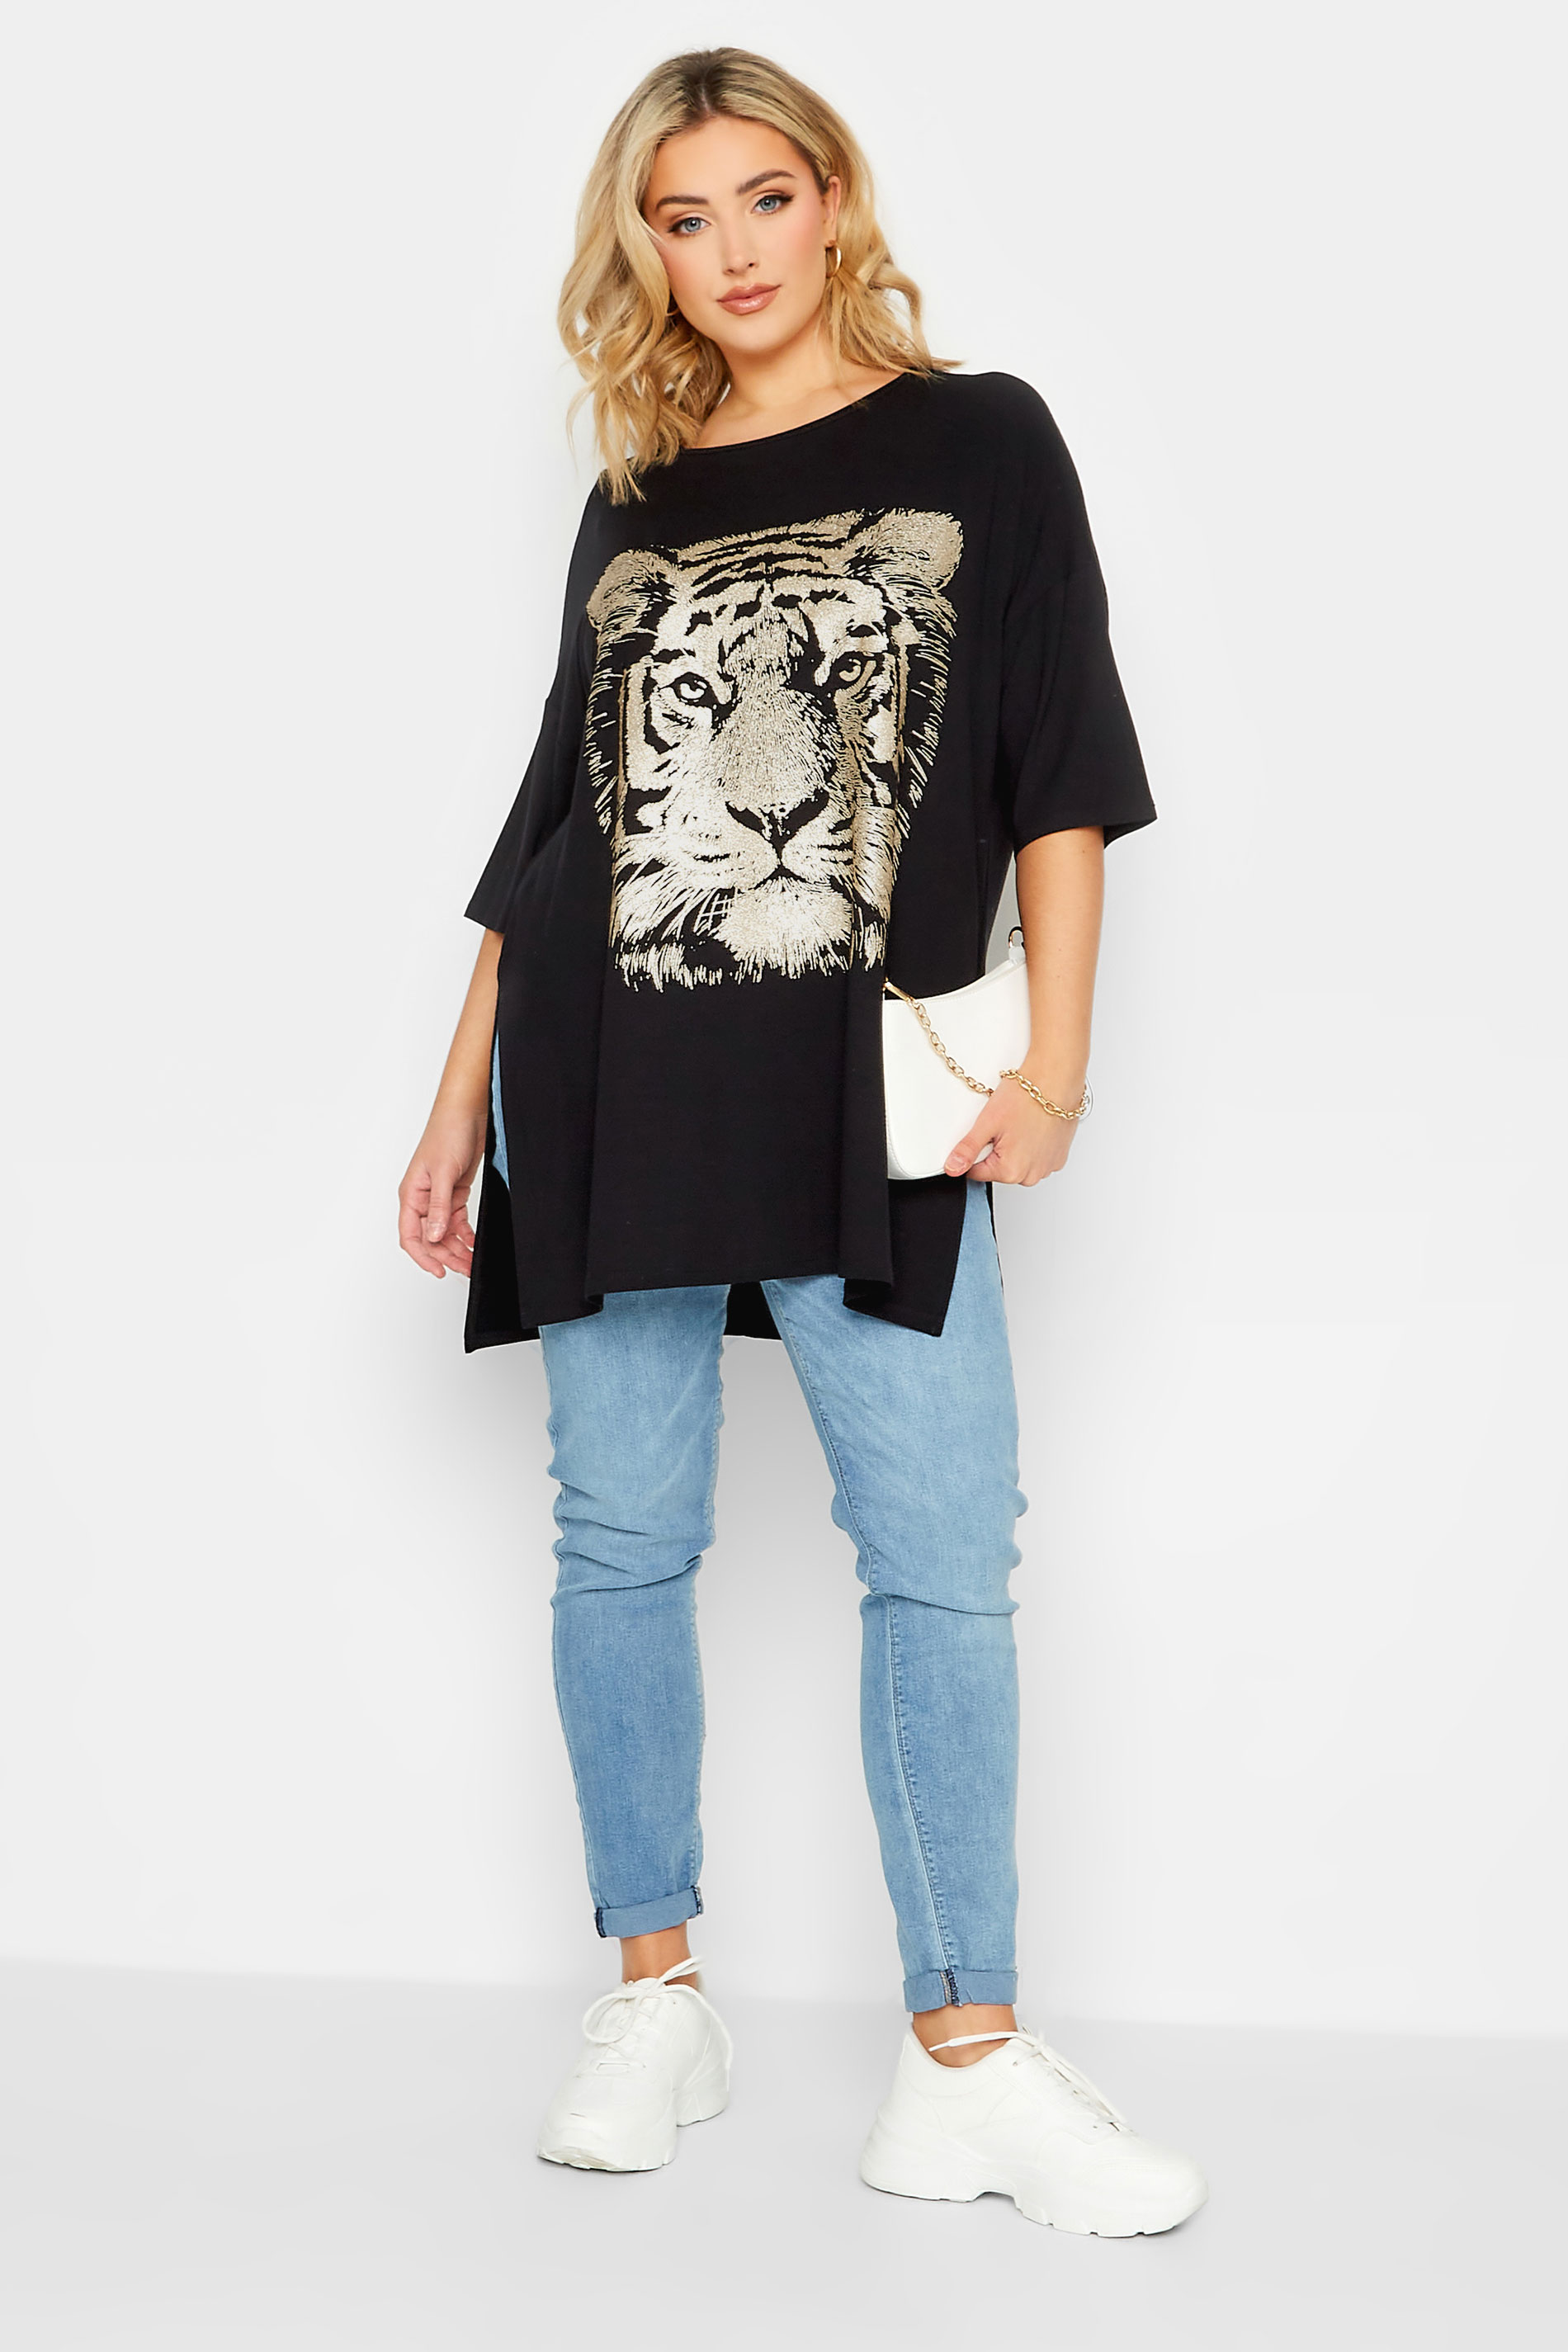 YOURS Plus Size Black & Gold Glitter Tiger Print Split Hem T-Shirt | Yours Clothing 2